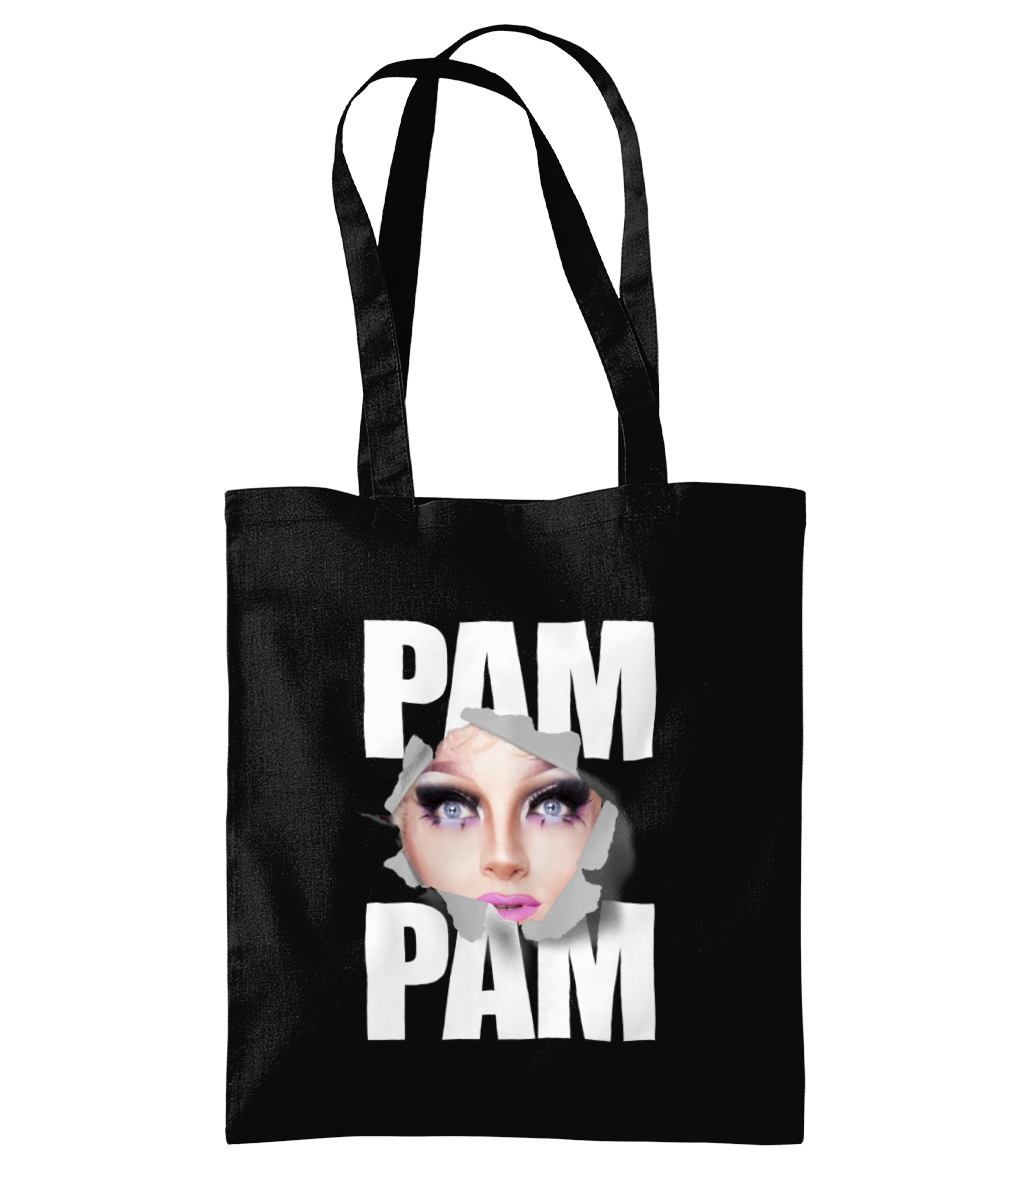 Patty Pam-Pam - Tote Bag